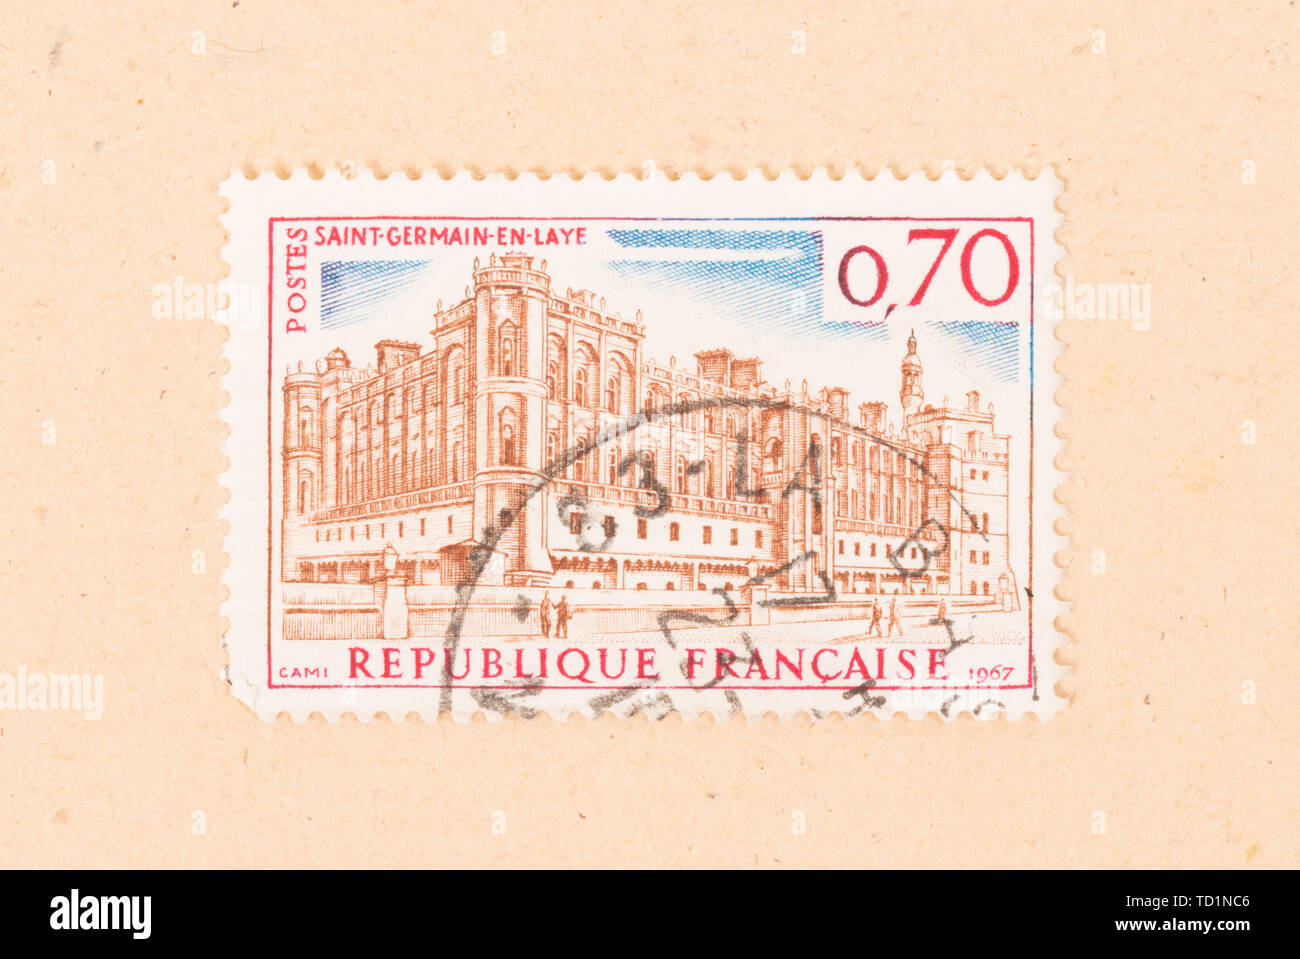 FRANCE - CIRCA 1967: A stamp printed in France shows Saint-Germain-en-Laye, circa 1967 Stock Photo